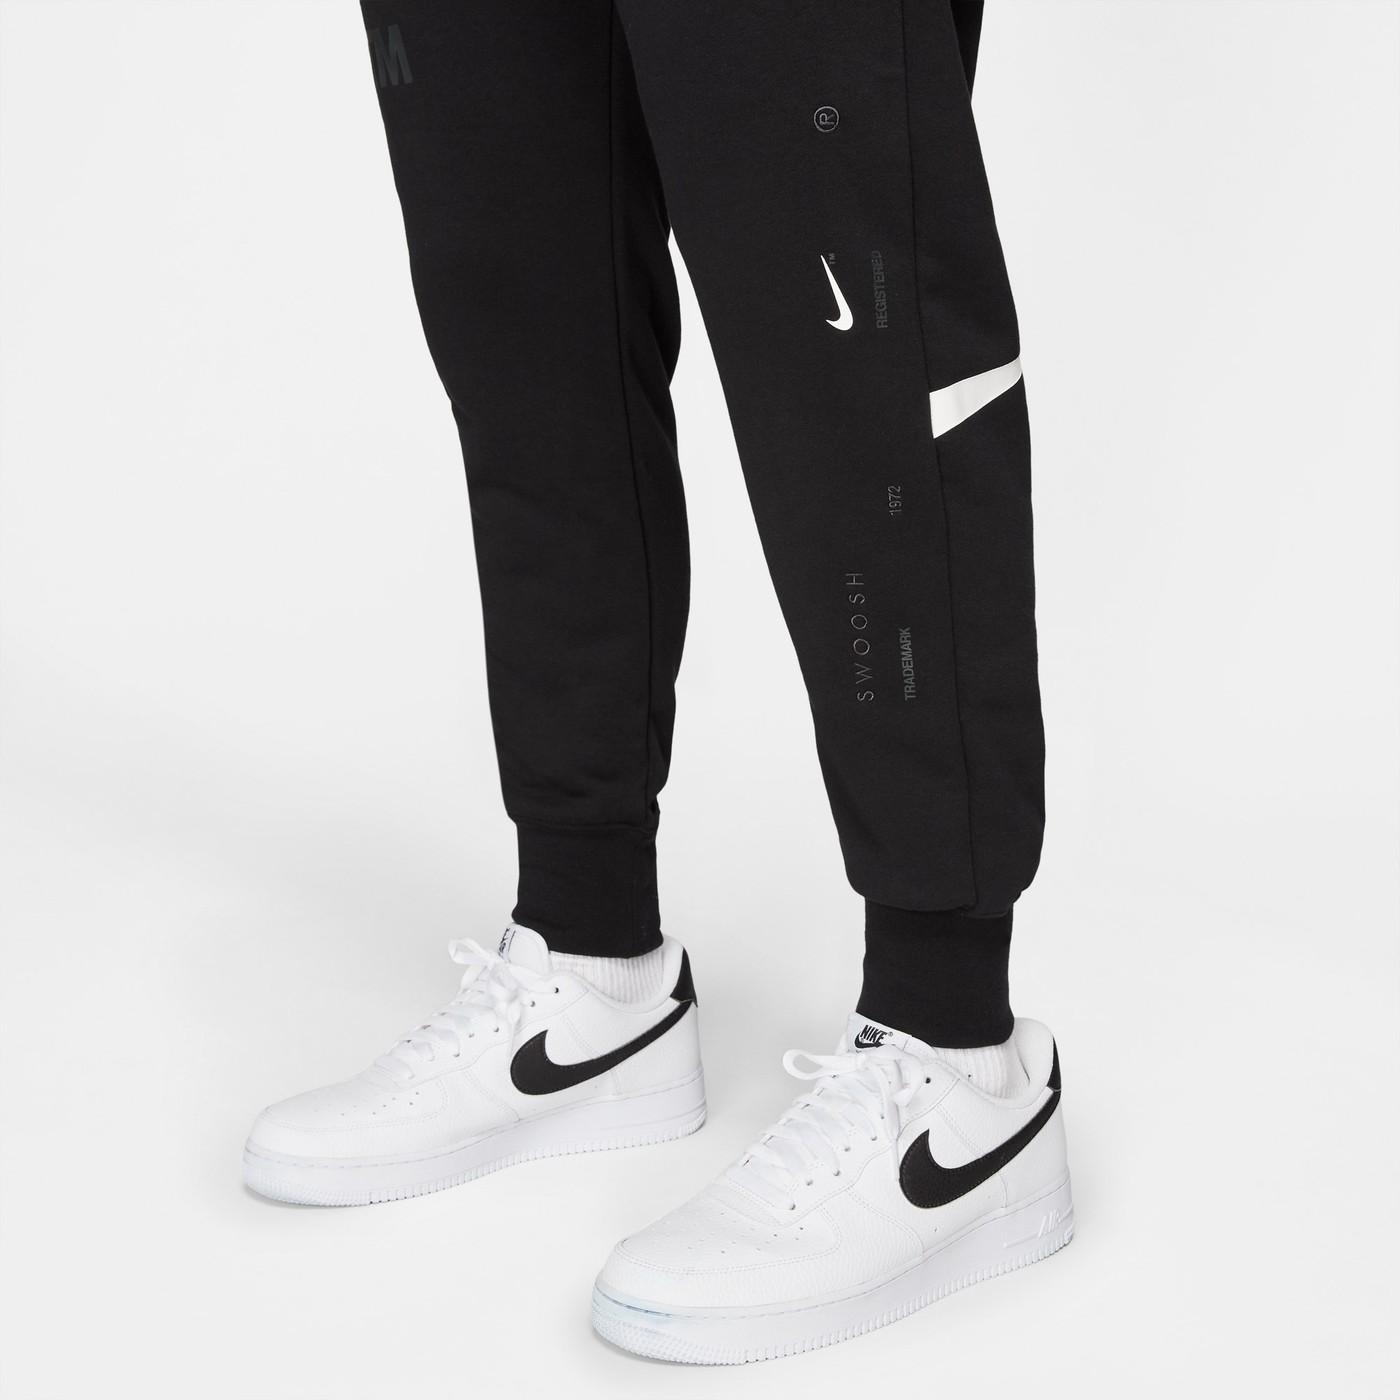 Nike Swoosh Semi-Brushed Back Erkek Siyah Eşofman Altı